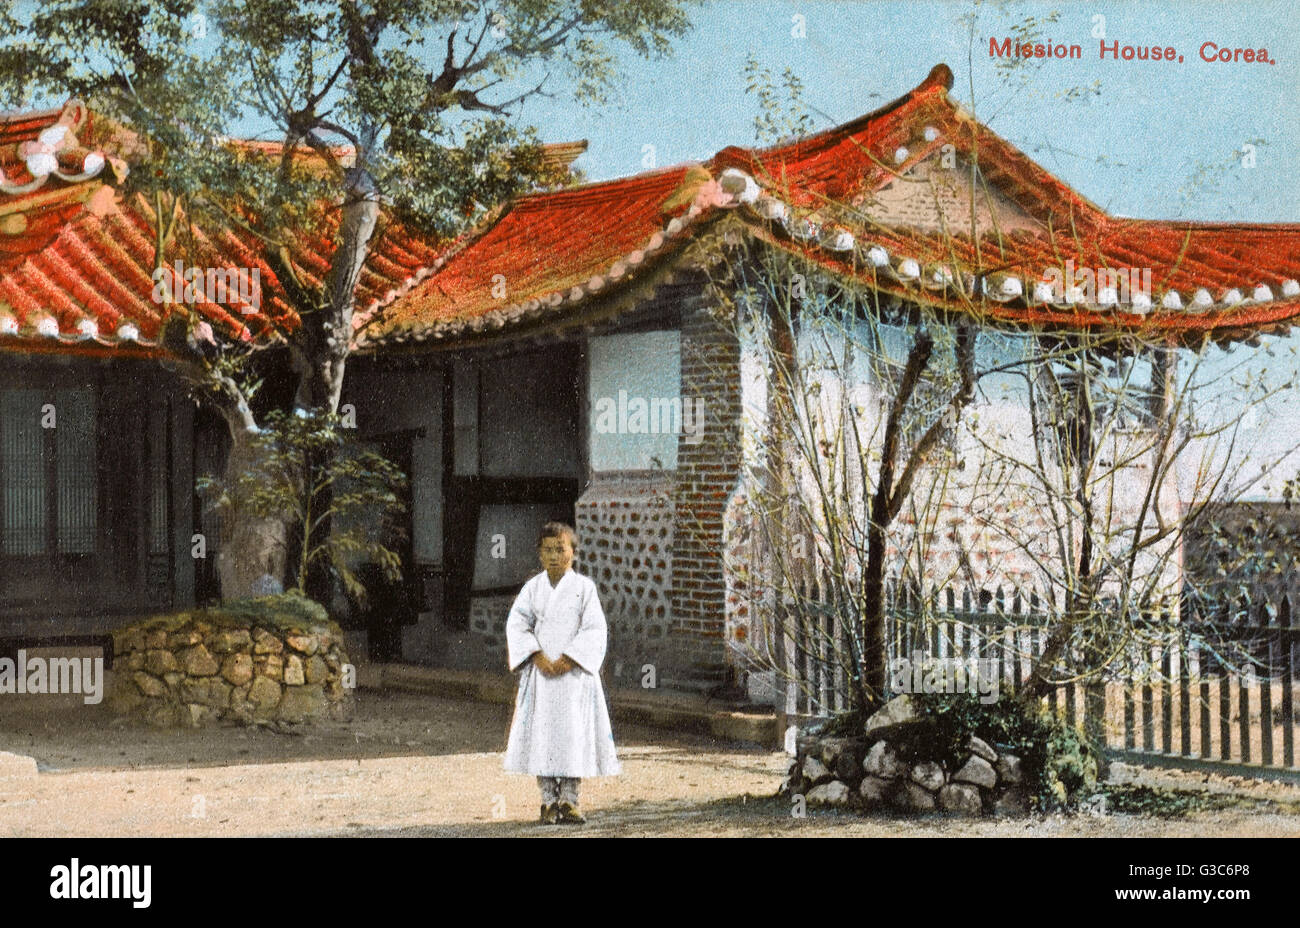 South Korea - Ganghwa Island - The S.P.G. Mission House Stock Photo